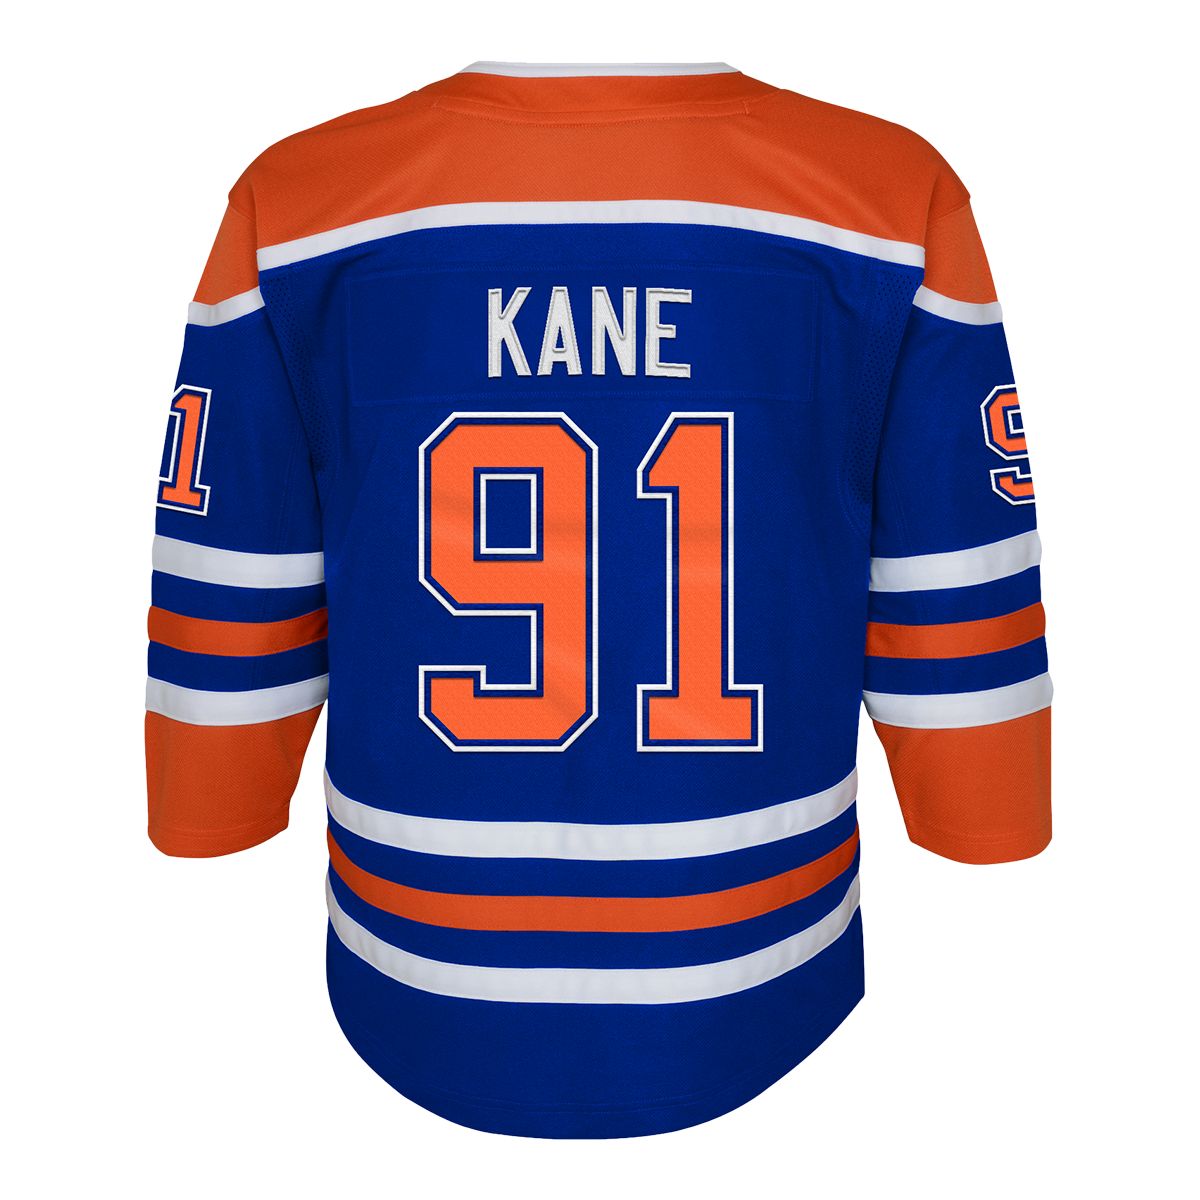 Evander Kane Jersey, Adidas Evander Kane Oilers Jerseys, Gear, Apparel -  Oilers Shop